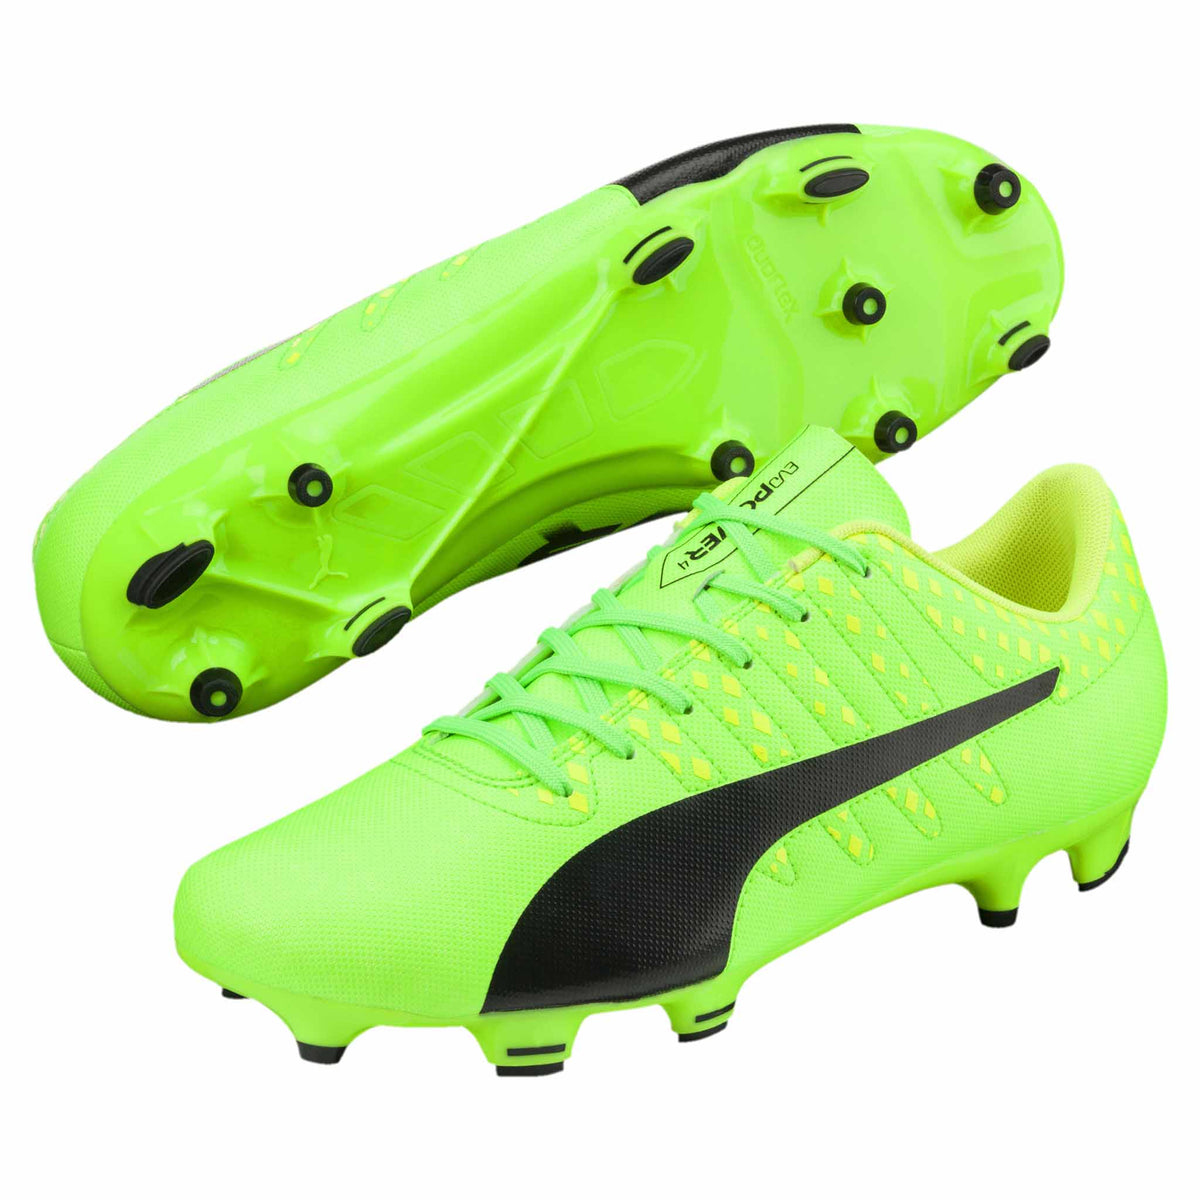 Puma evoPower Vigor 4 FG chaussures de soccer - Vert